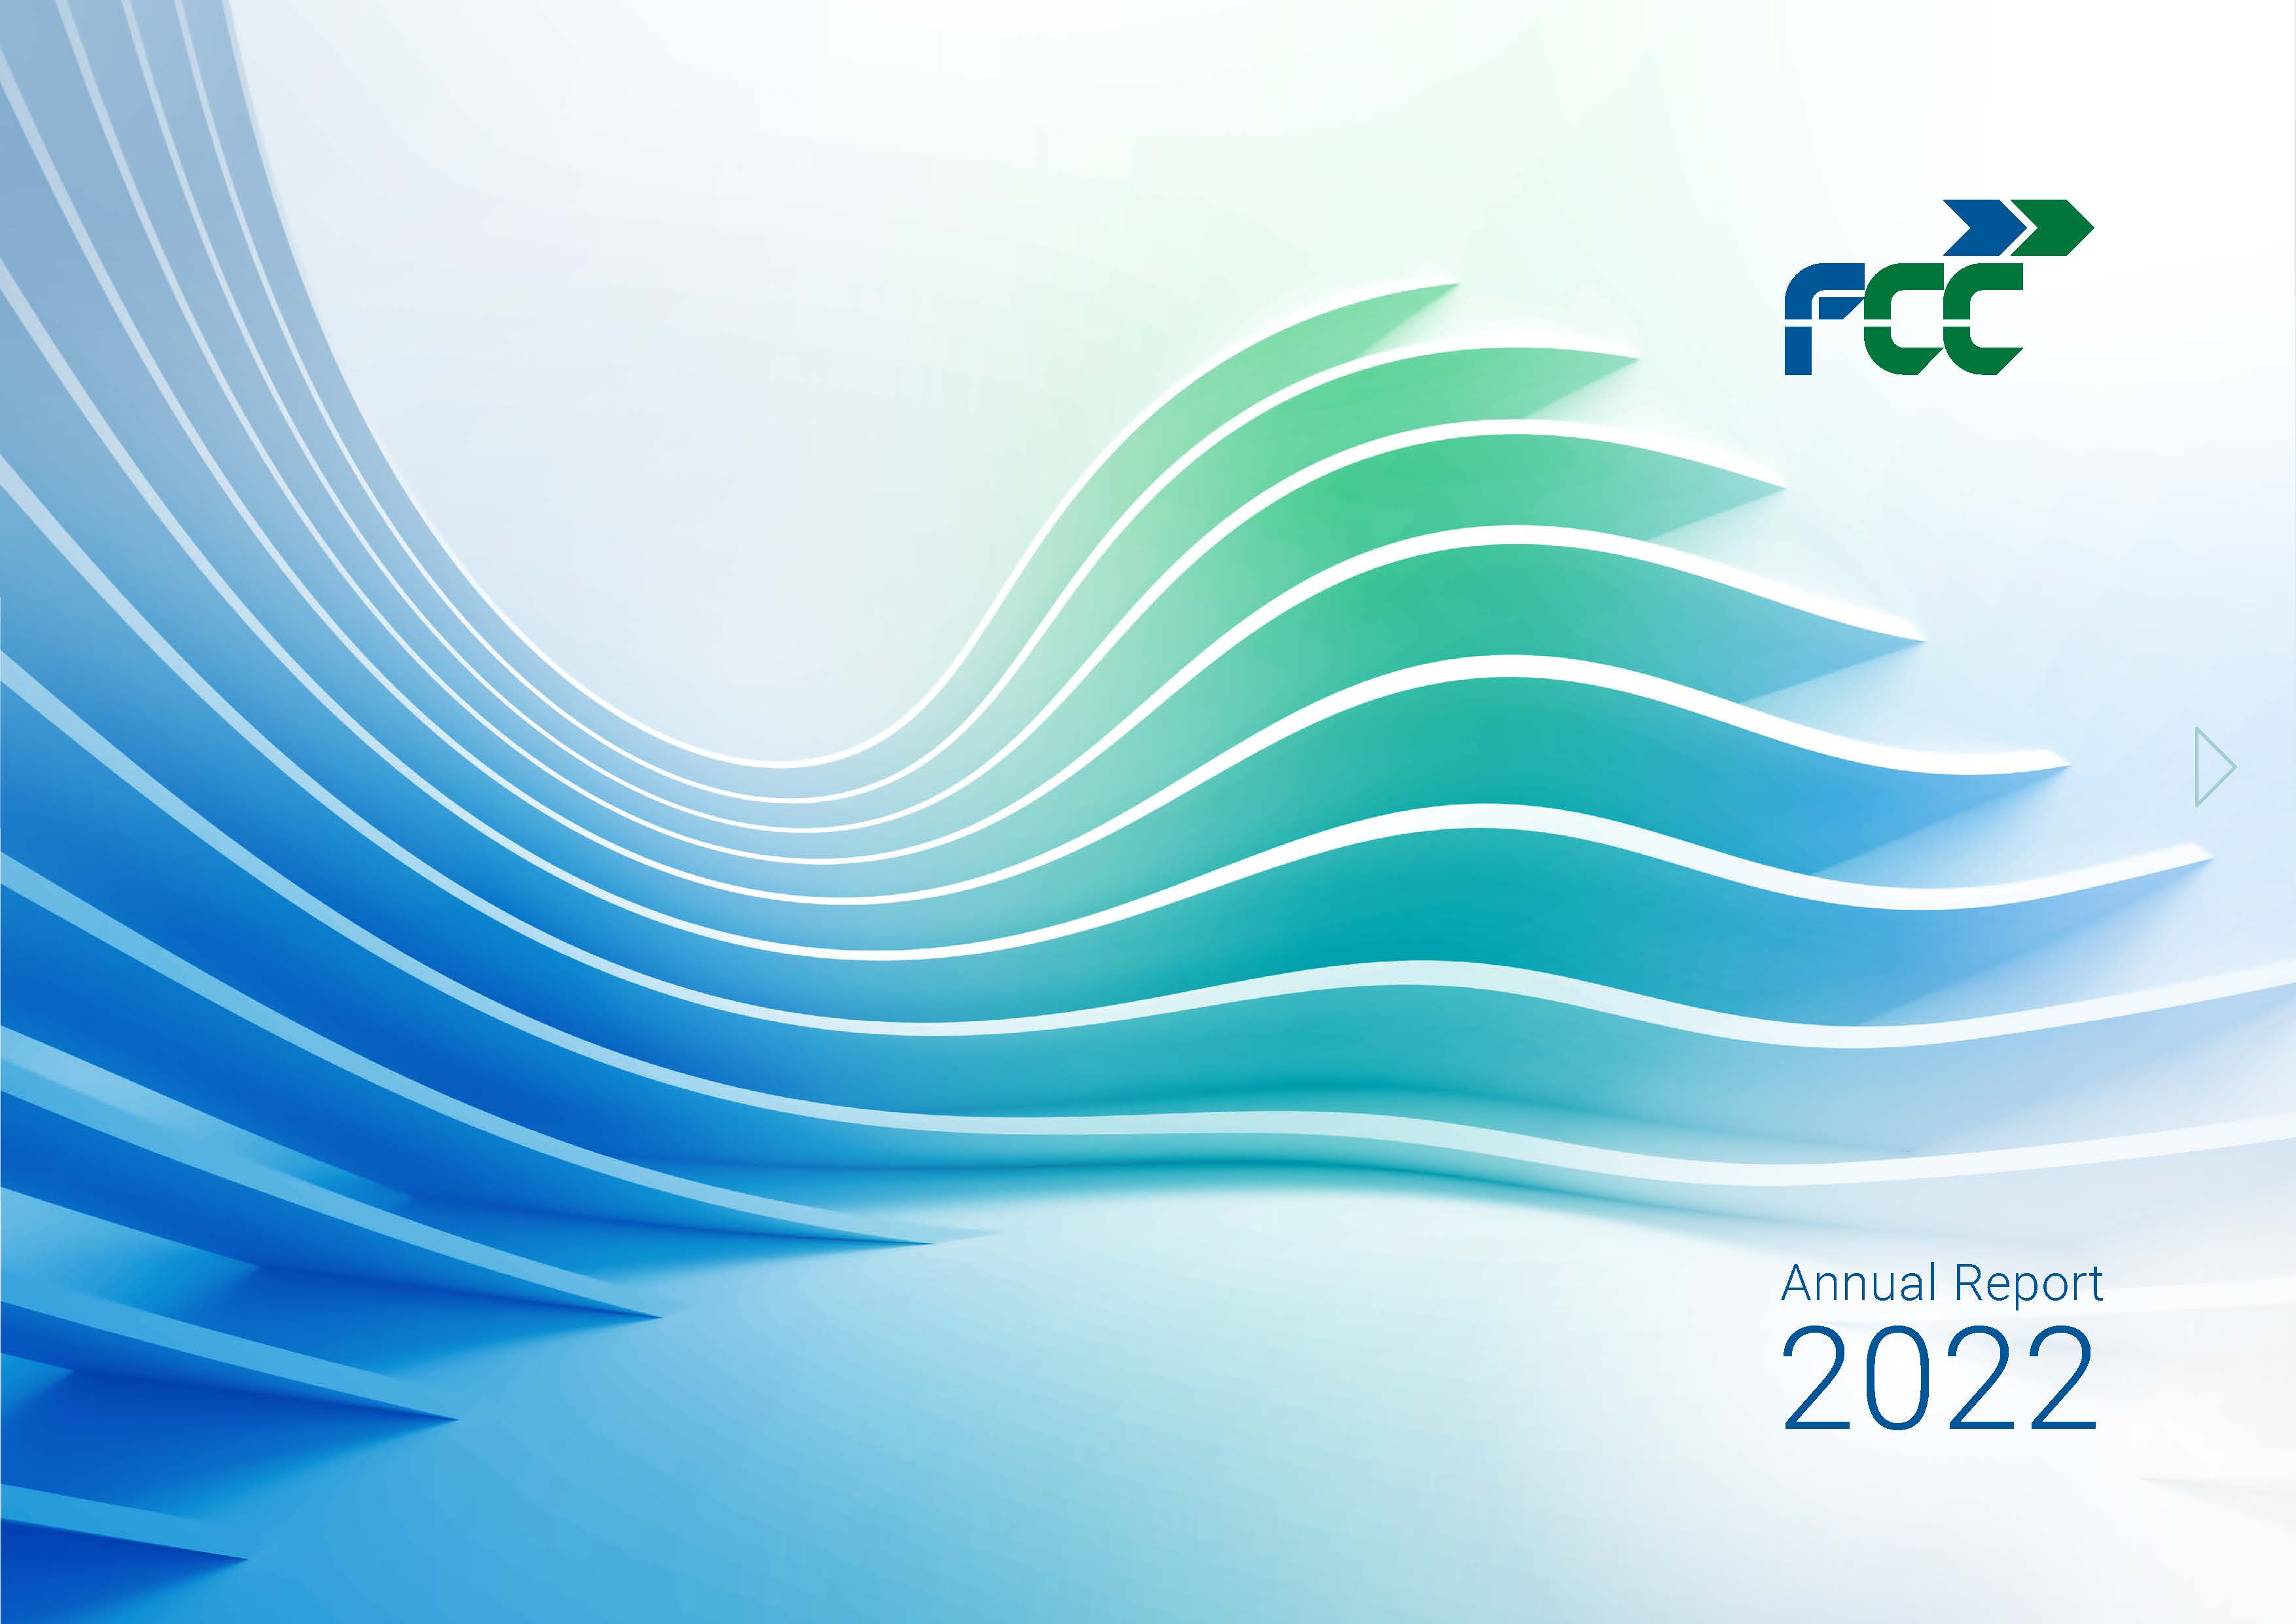 FCC Medio Ambiente Annual Report